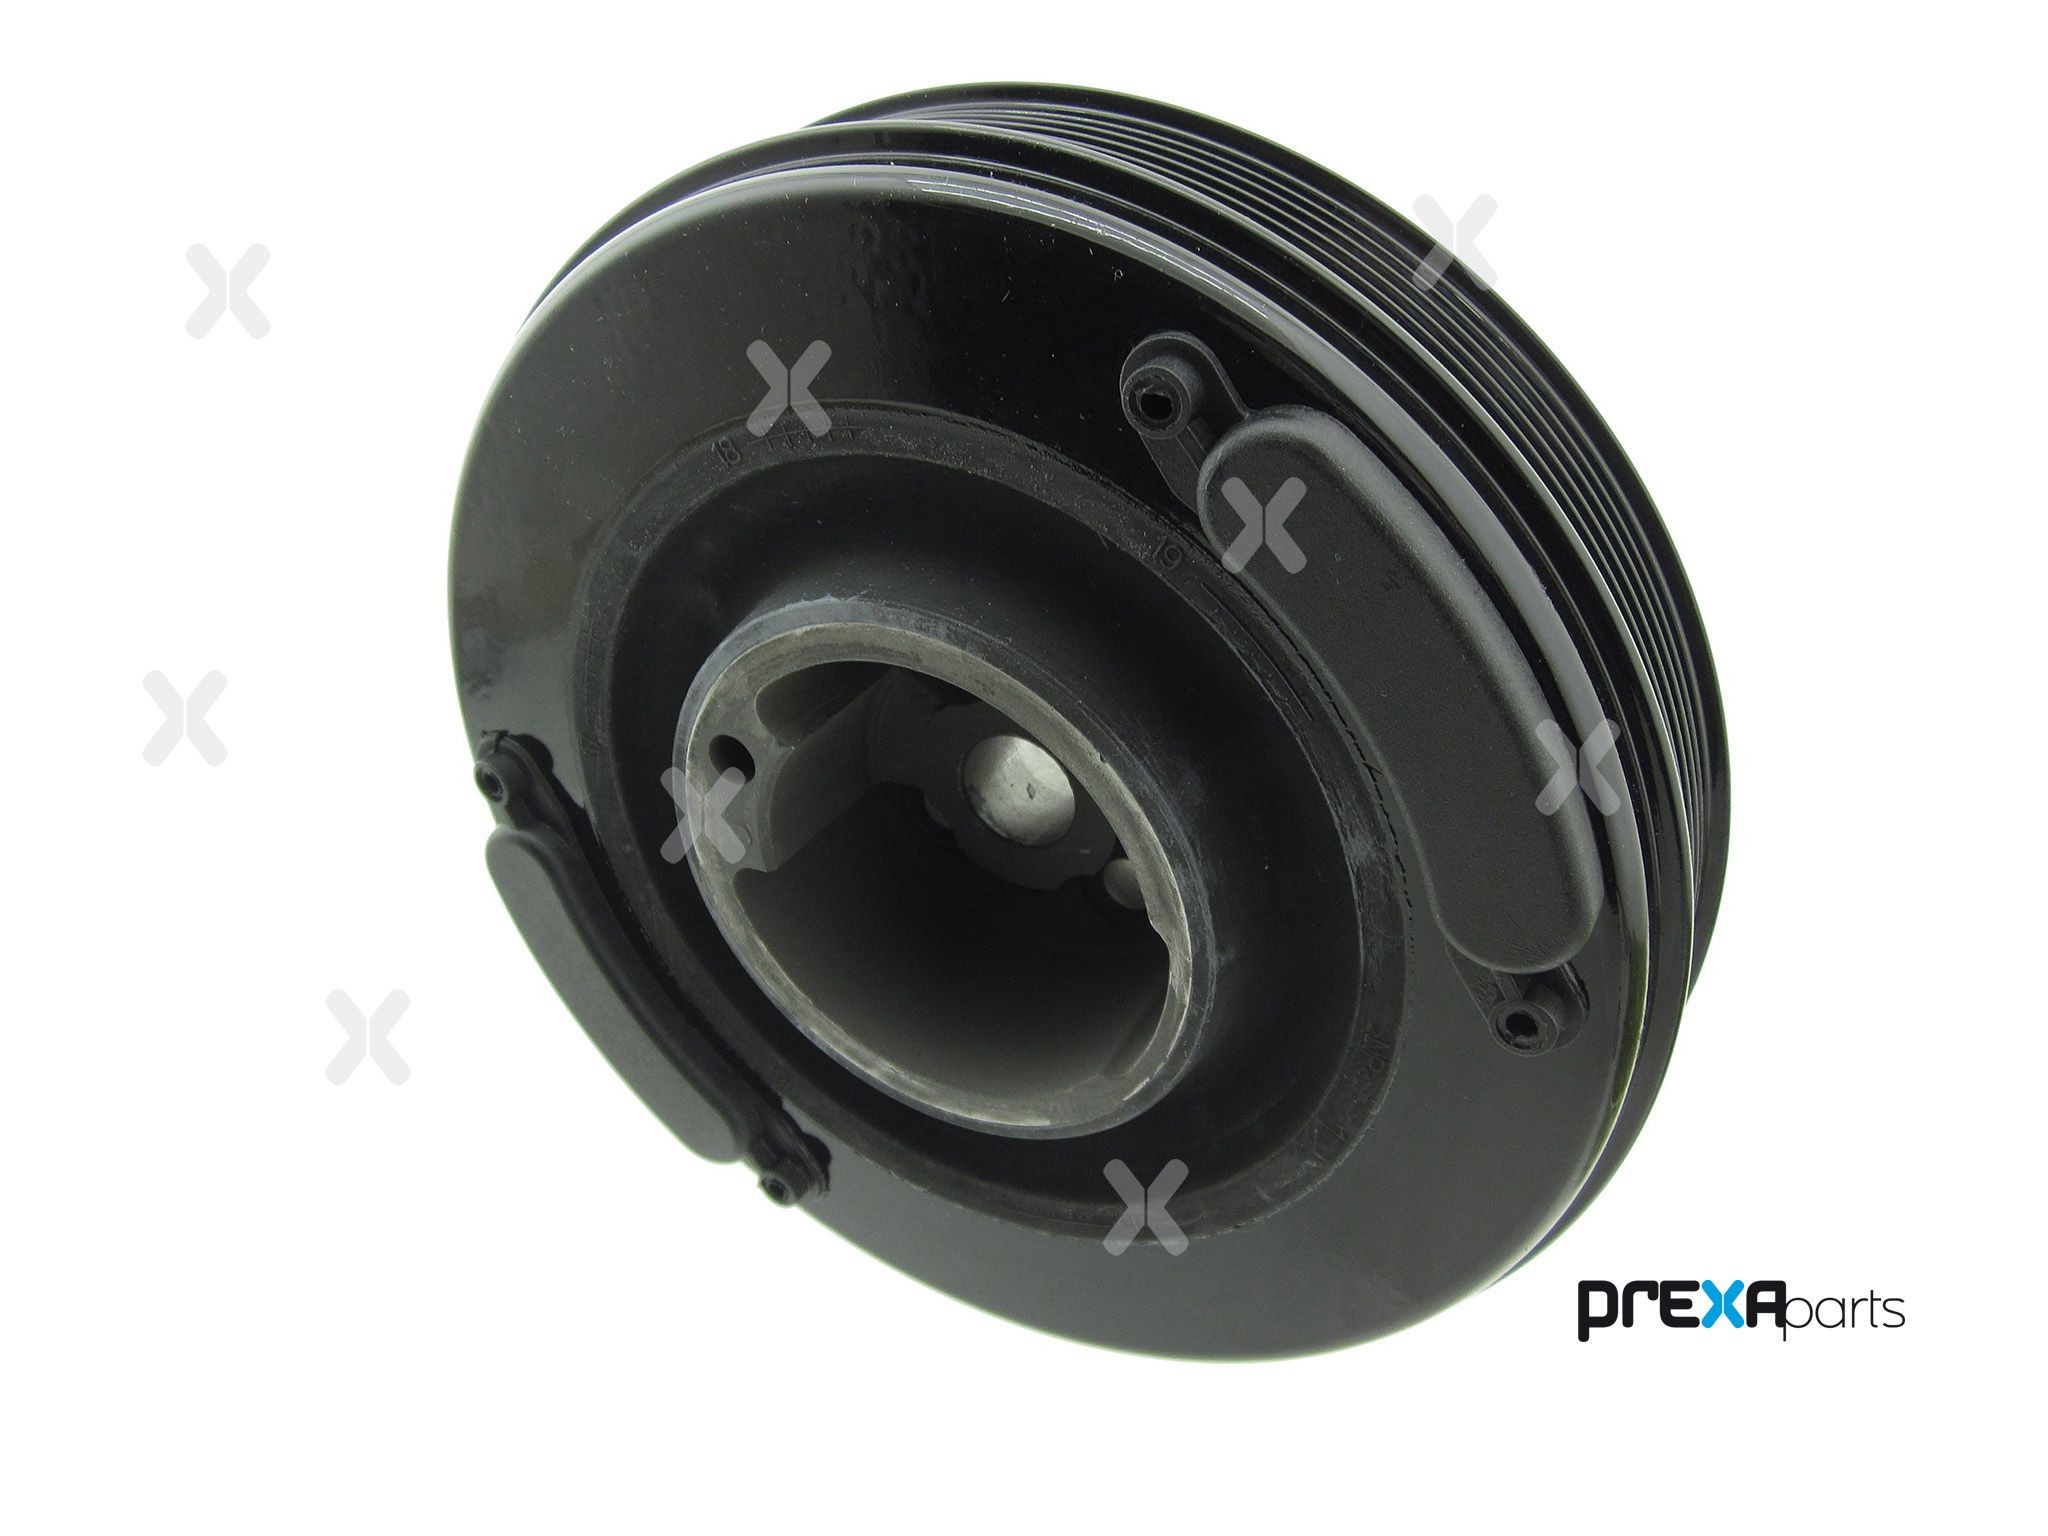 Crank pulley PREXAparts P125001 rating